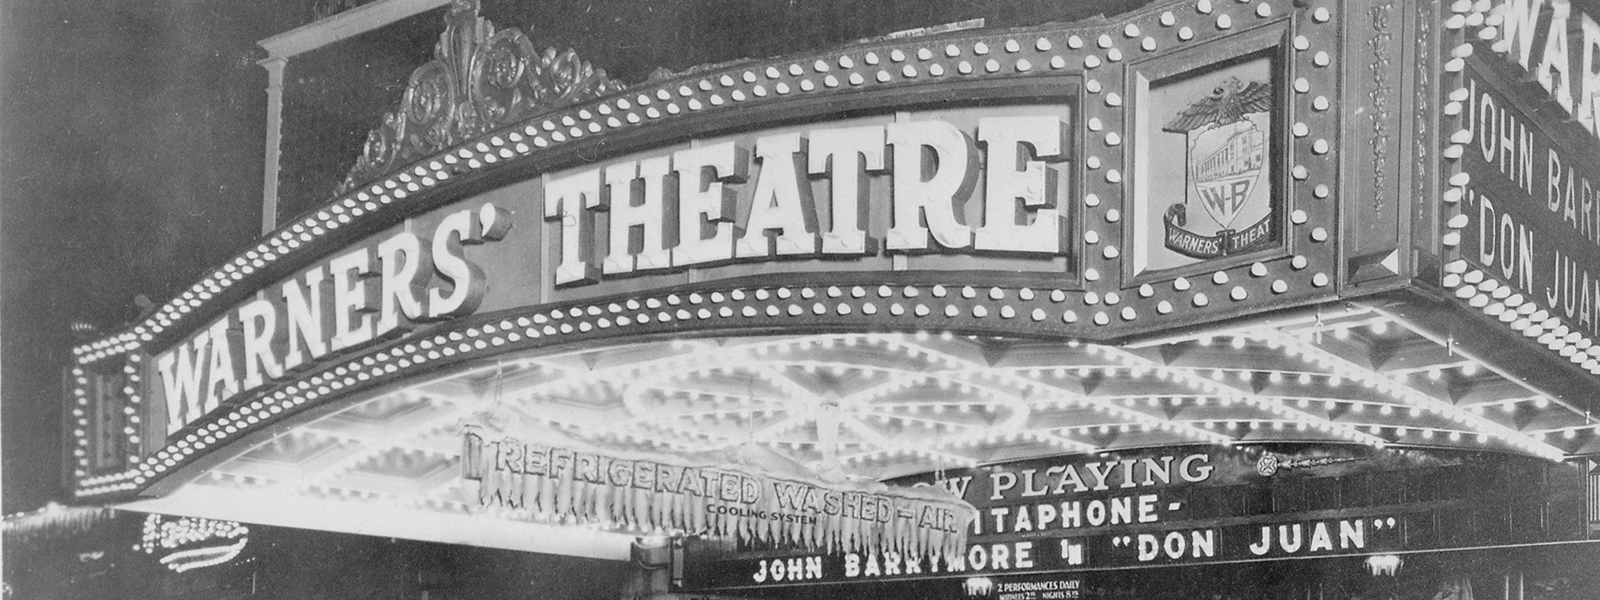 pre-1930s best films timeline banner art